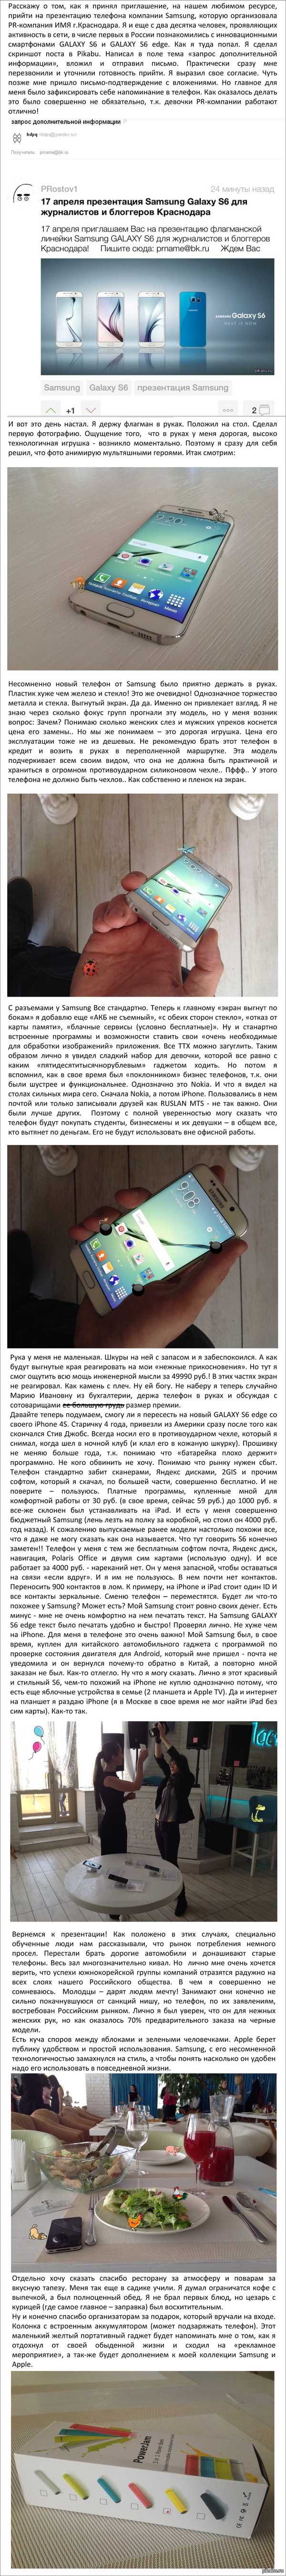 Samsung GALAXY S6 edge -     